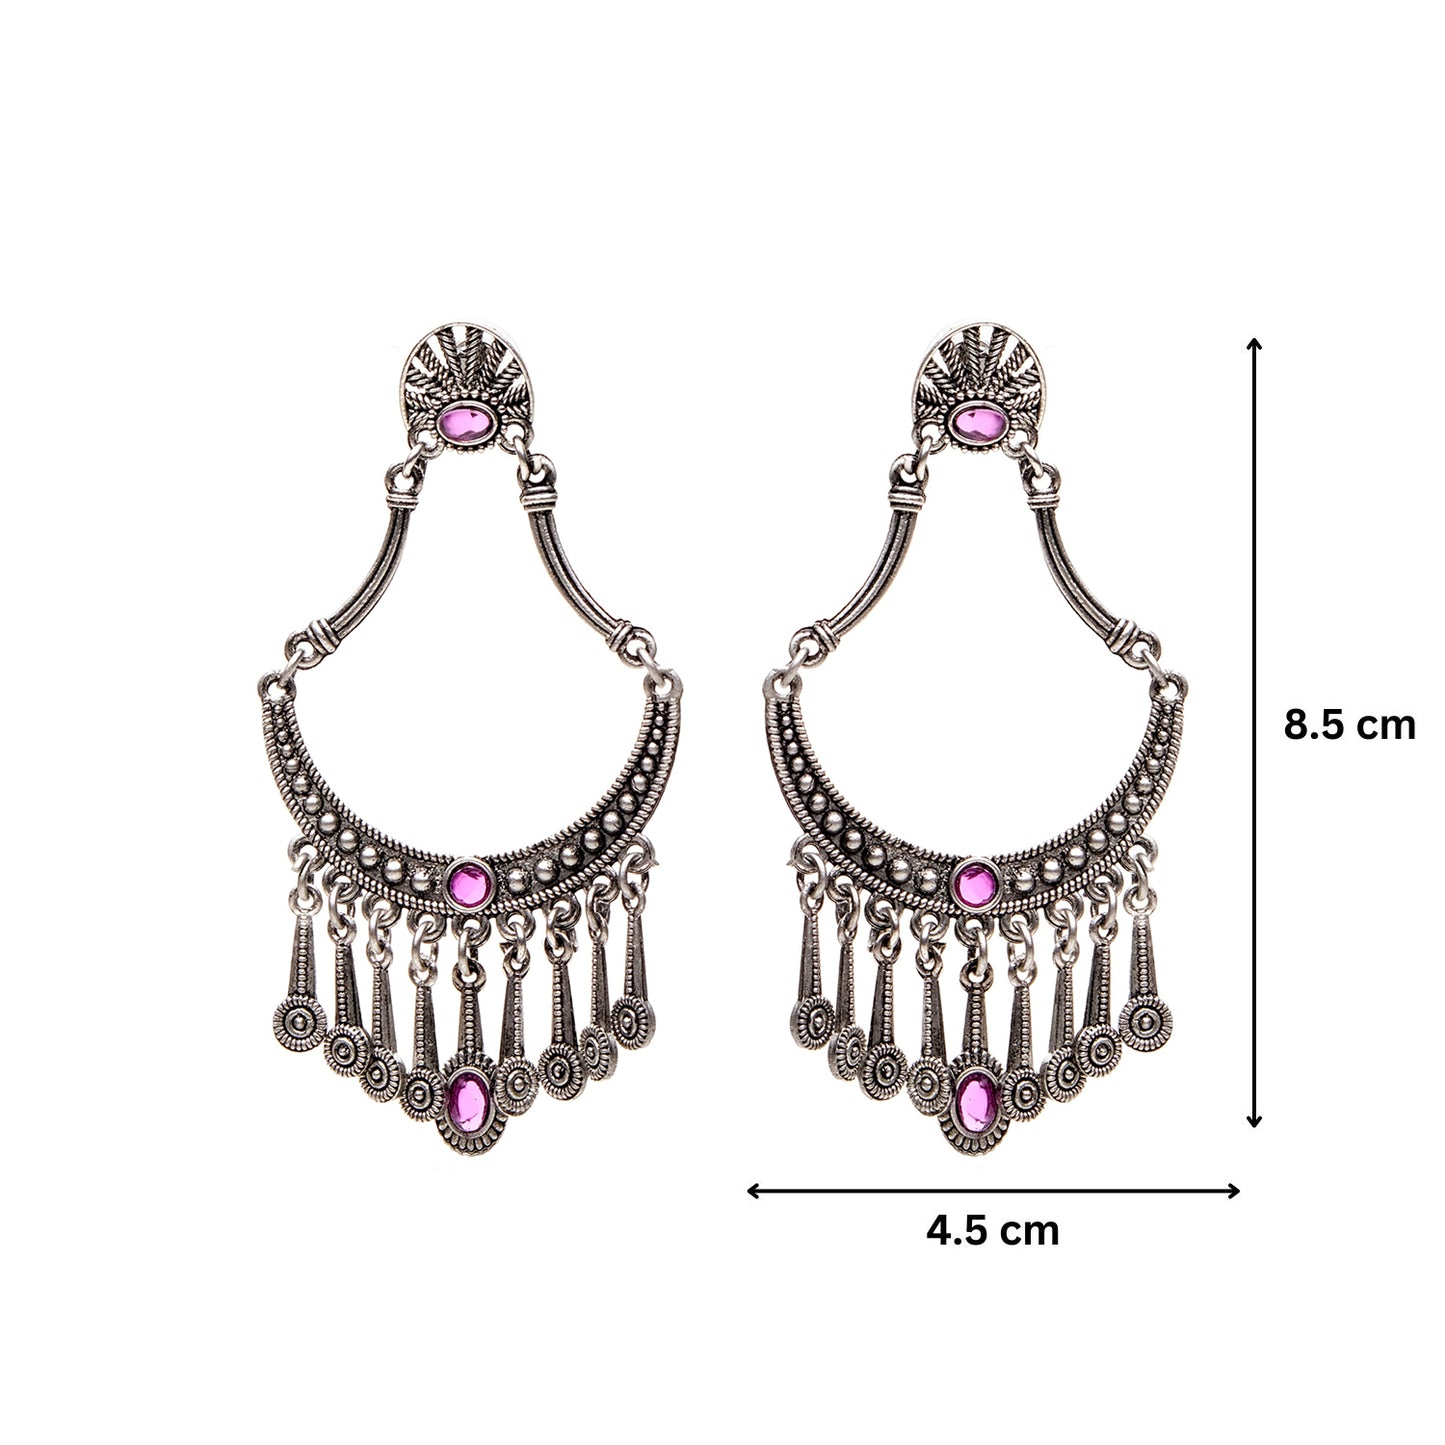 Pranali Silver Oxidised Earrings